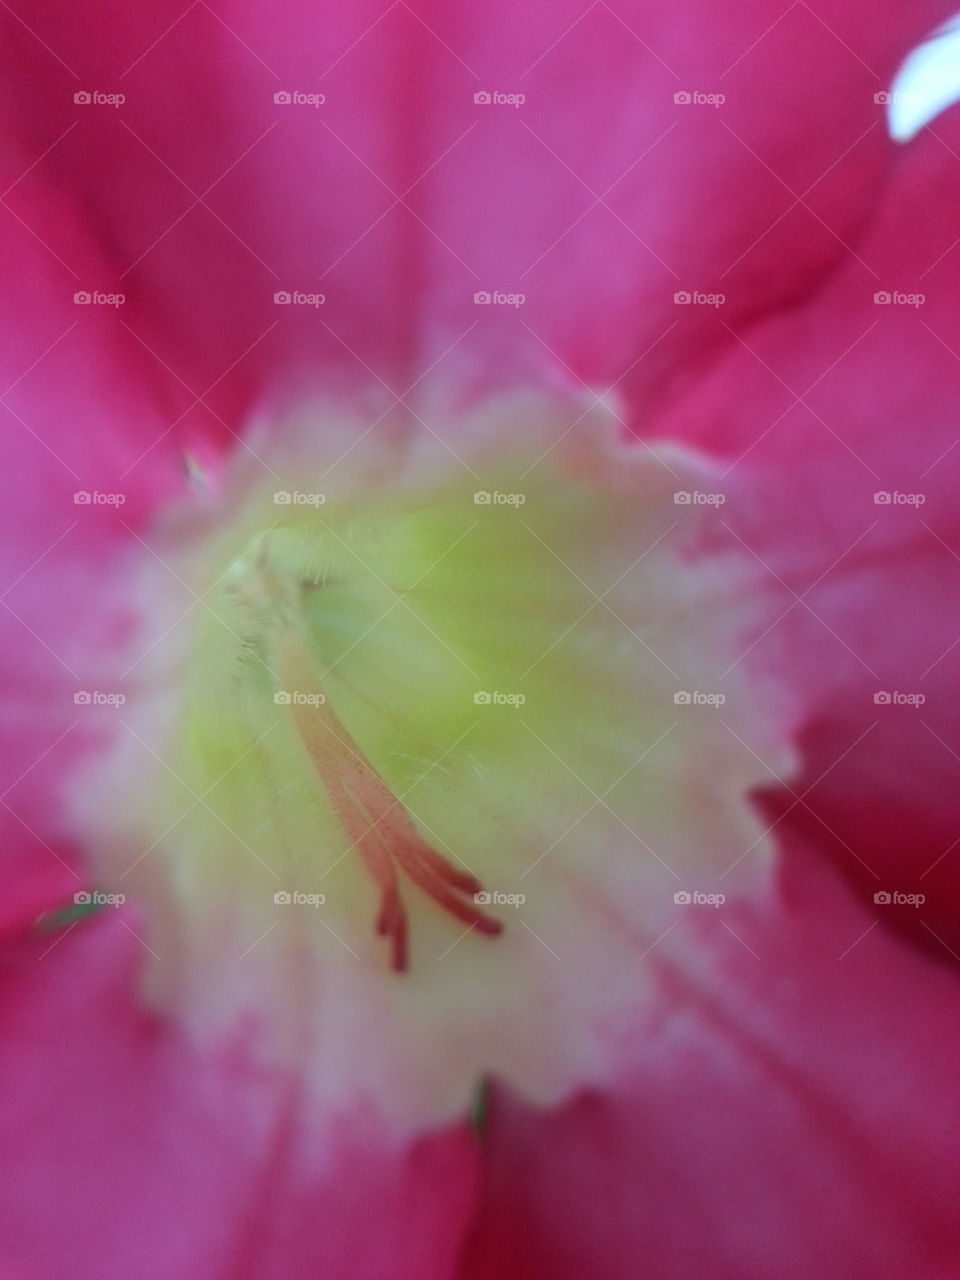 Inside of a Flower